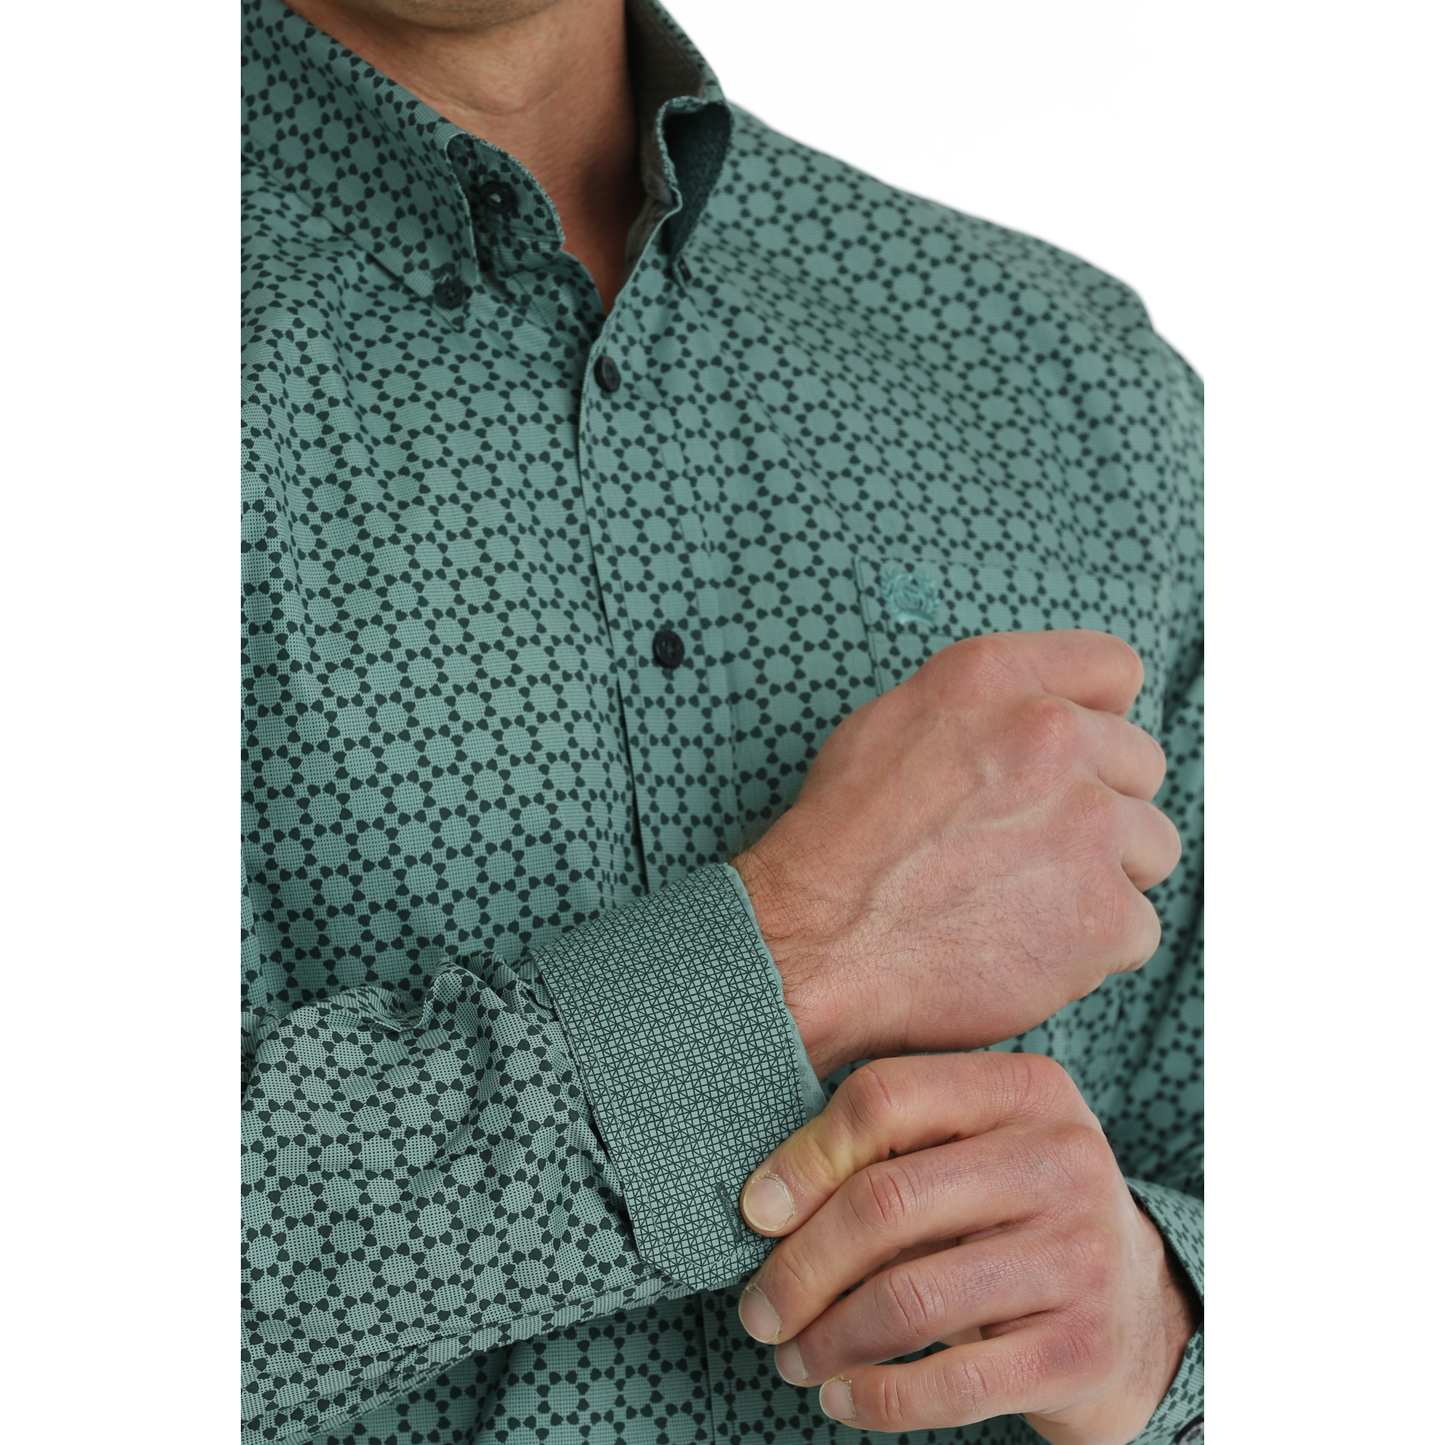 Cinch Men's Teal Circular Print Button Down Shirt MTW1105707